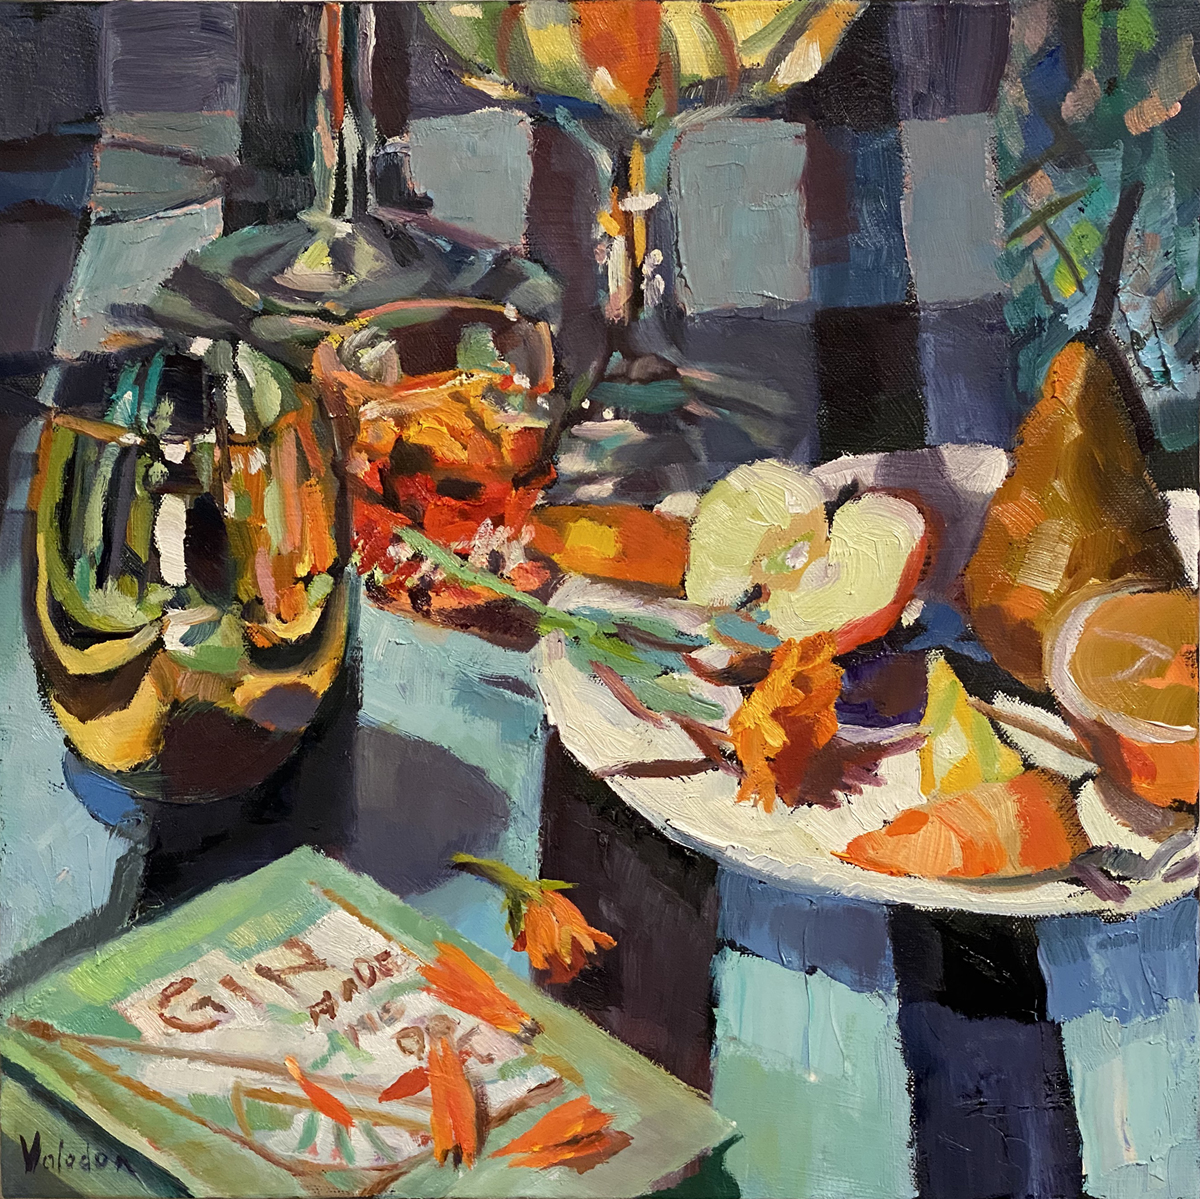 Rosemary Valadon 'Summer Days 1' oil on canvas 40 x 40cm $4,500